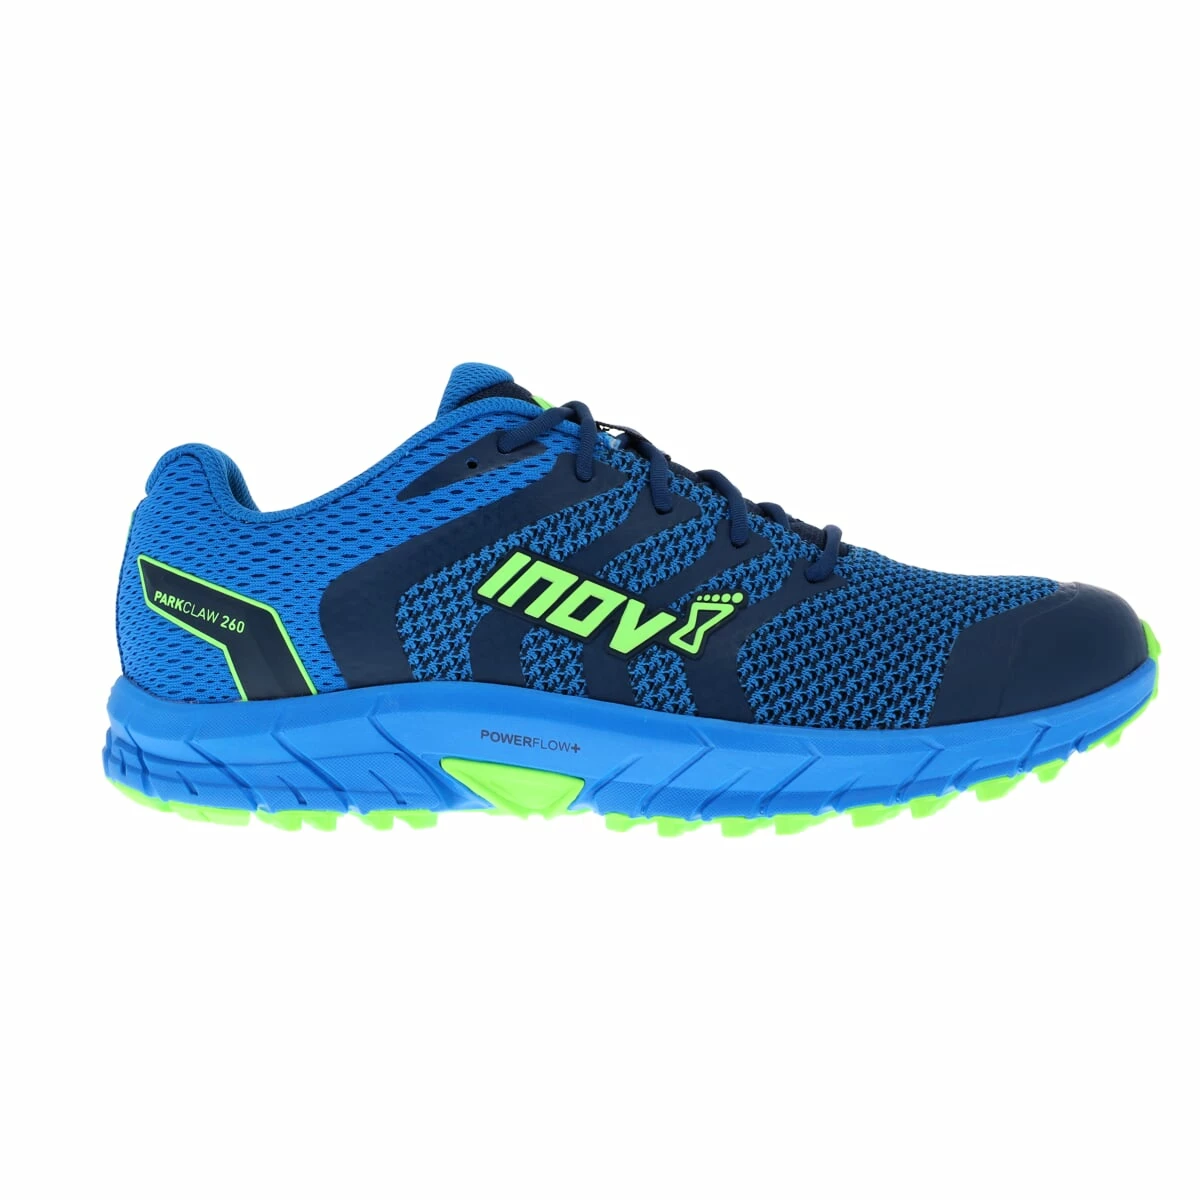 Inov-8 Men's Running Shoes Parkclaw 260 (s) UK 10